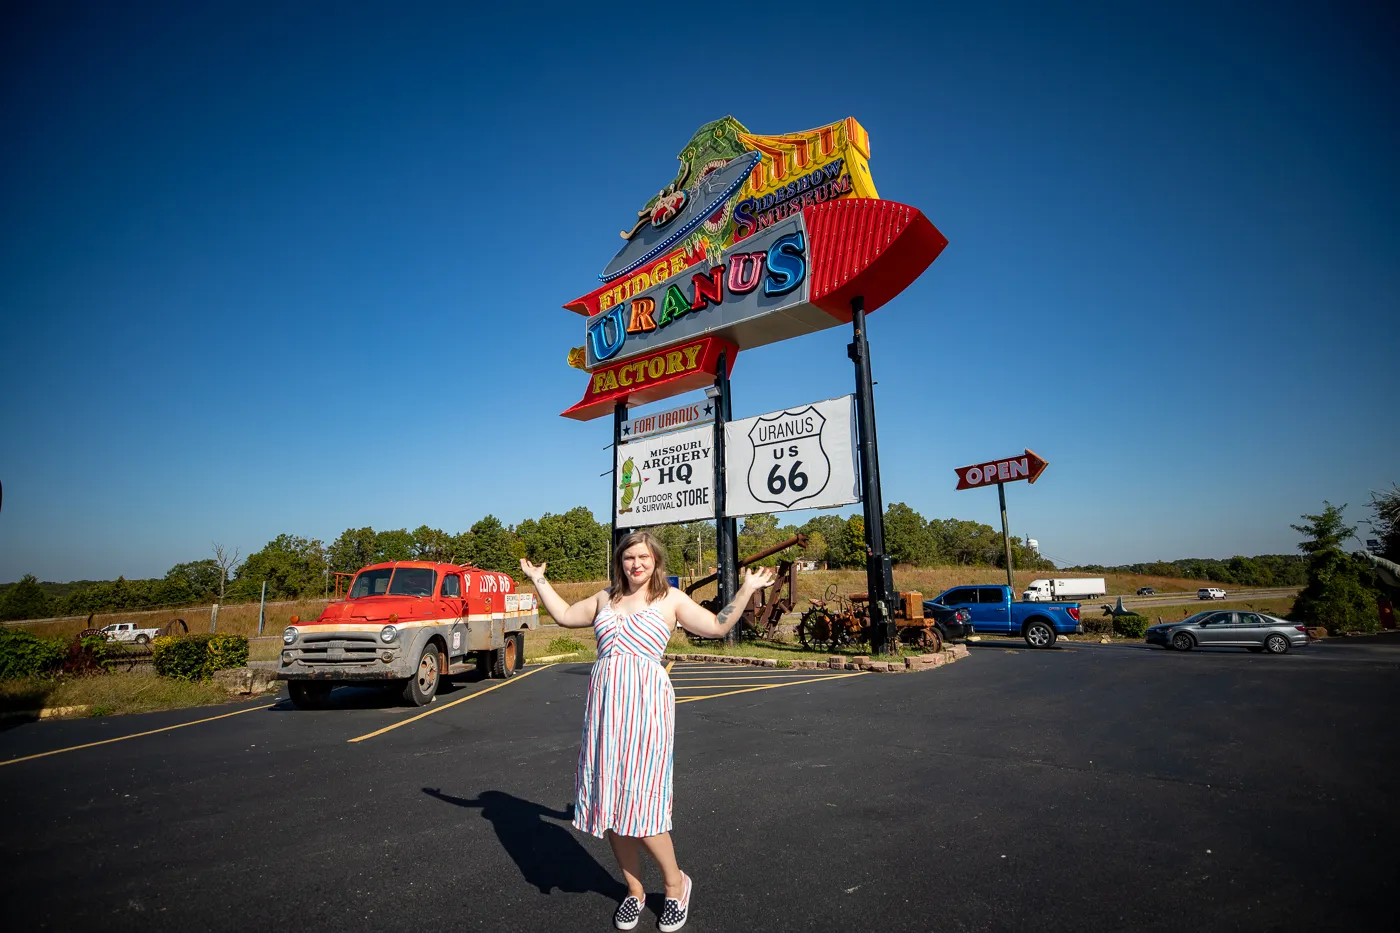 Uranus, Missouri and the Uranus Fudge Factory and General Store - Route 66 Roadside Attraction